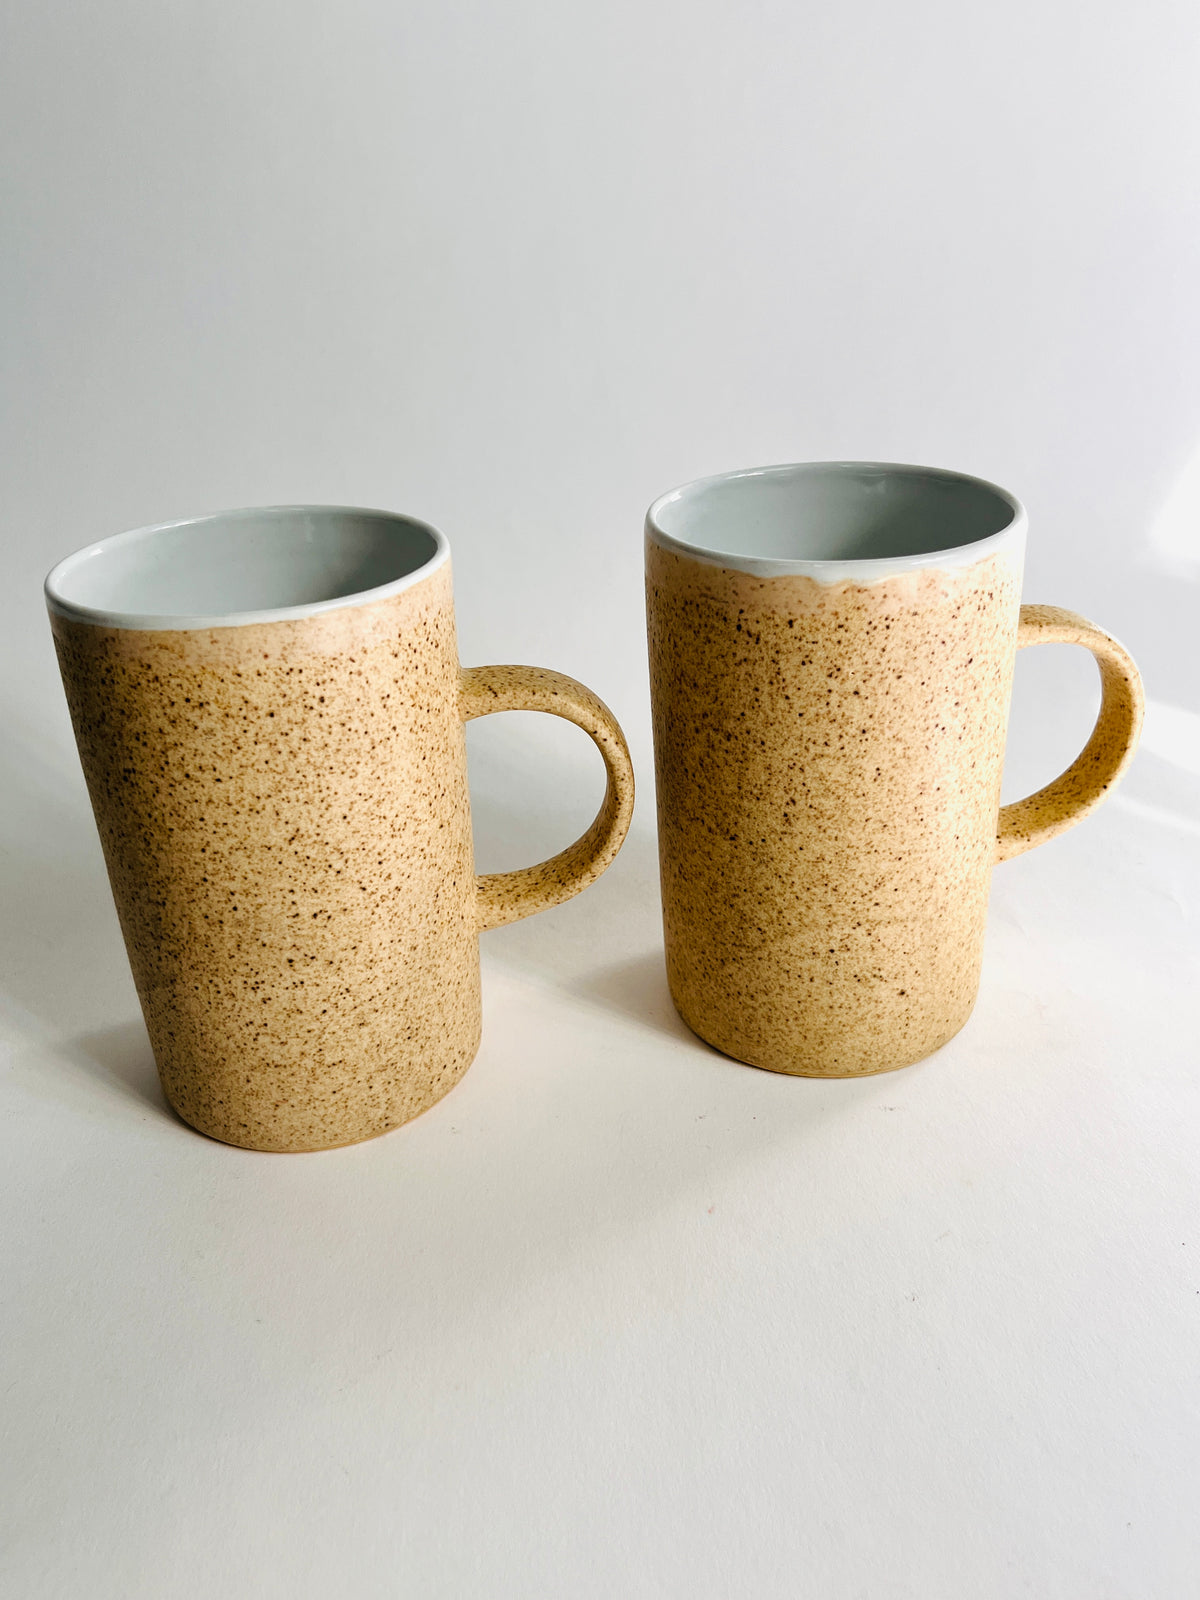 Vintage Stoneware Mugs - a Pair